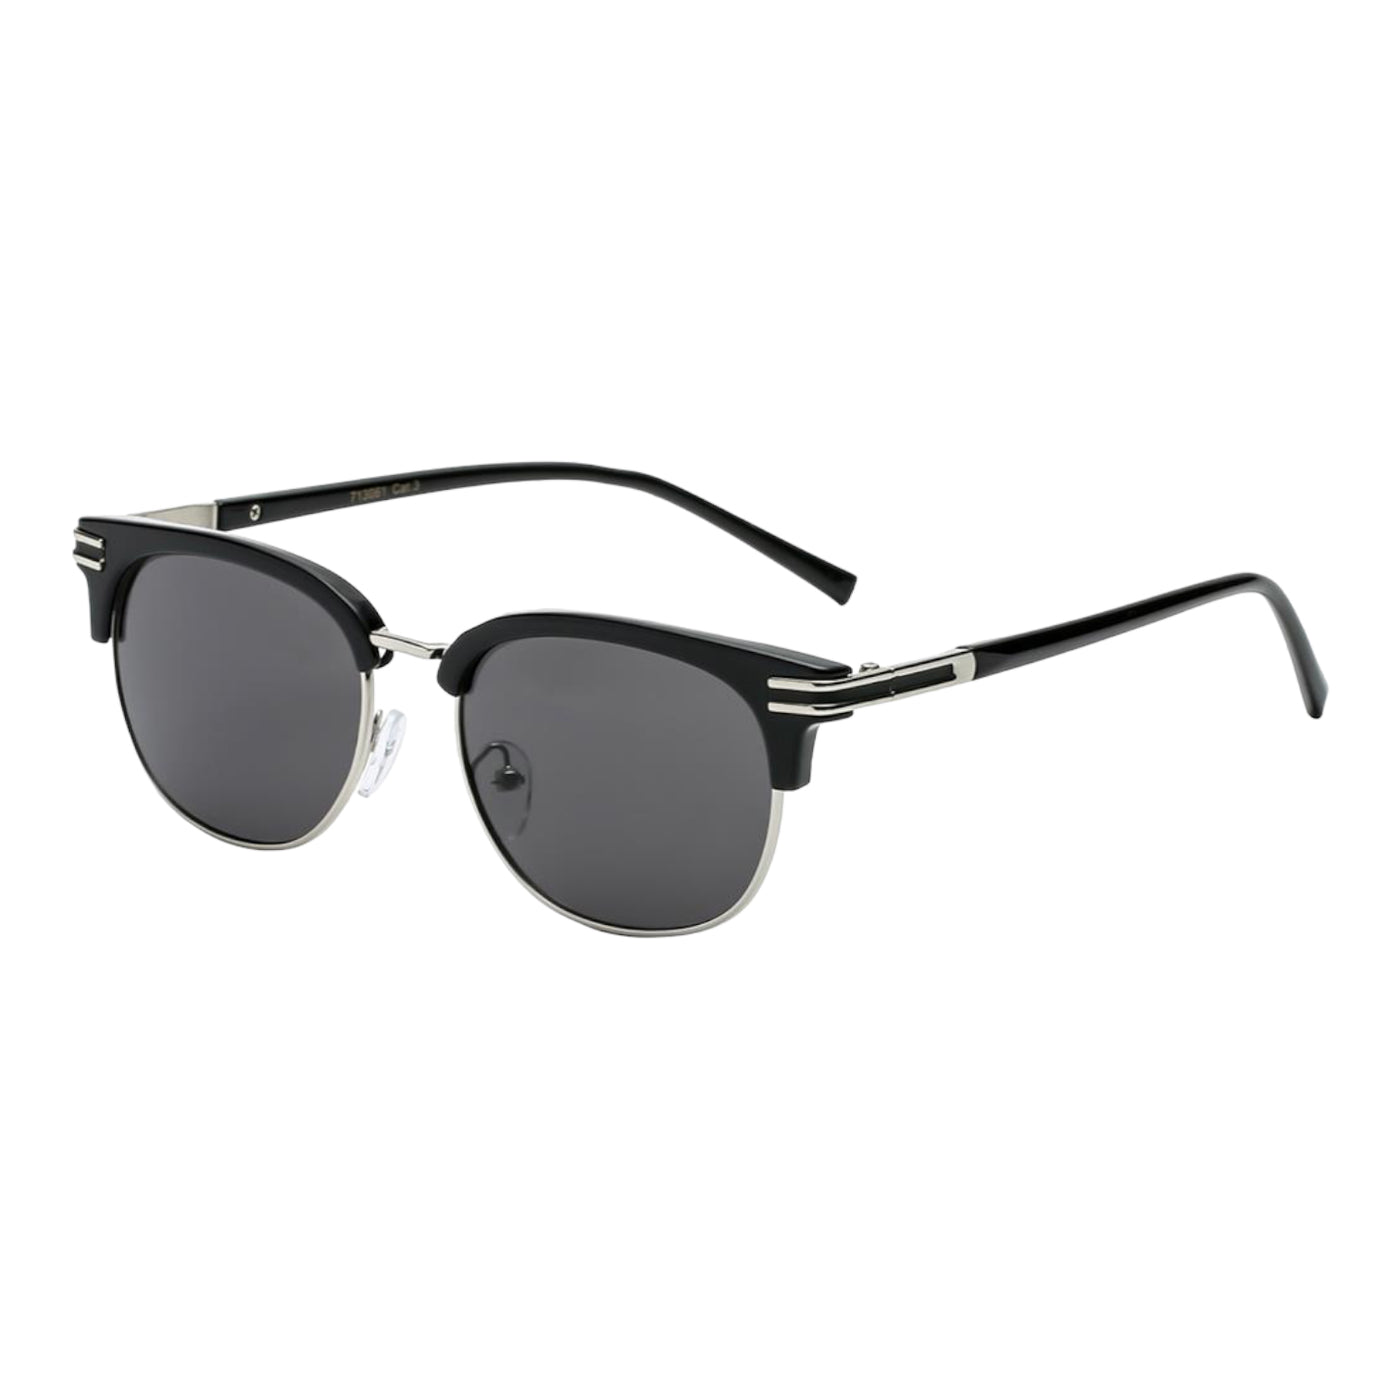 USA American Classic Retro Round Sunglasses BLACK/SILVER Frame with BLACK Lens